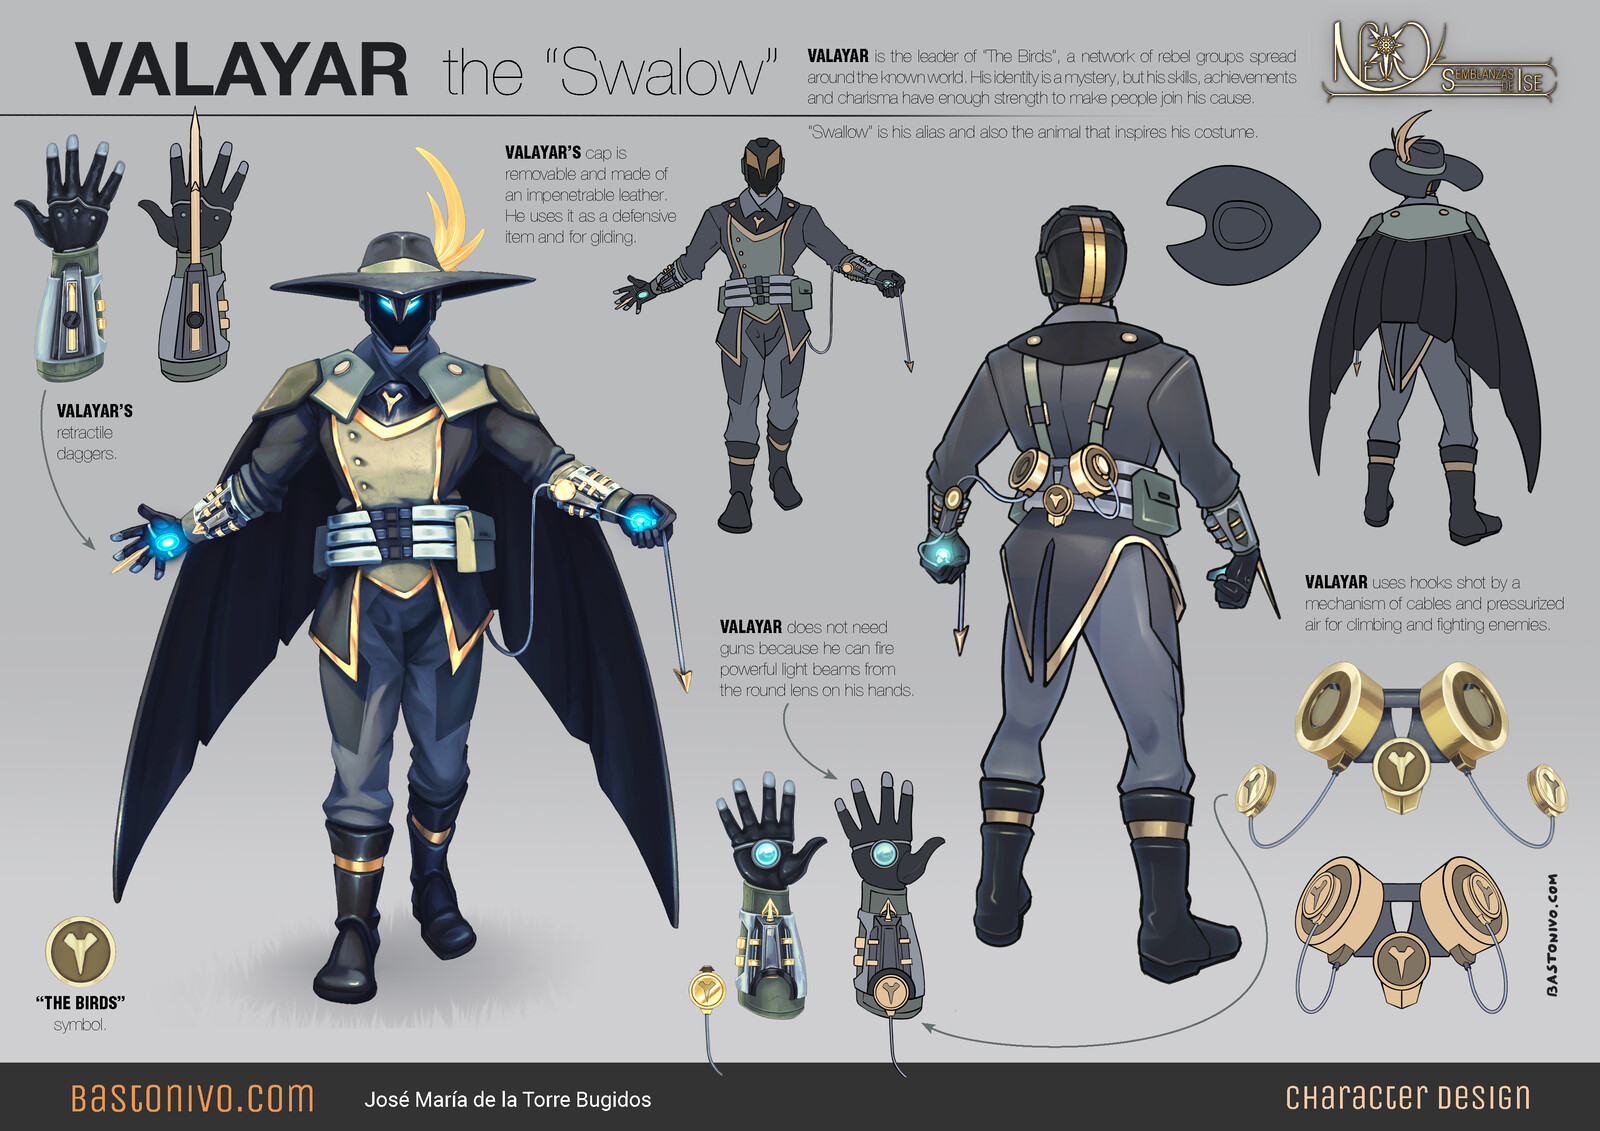 Valayar, the "Swalow"